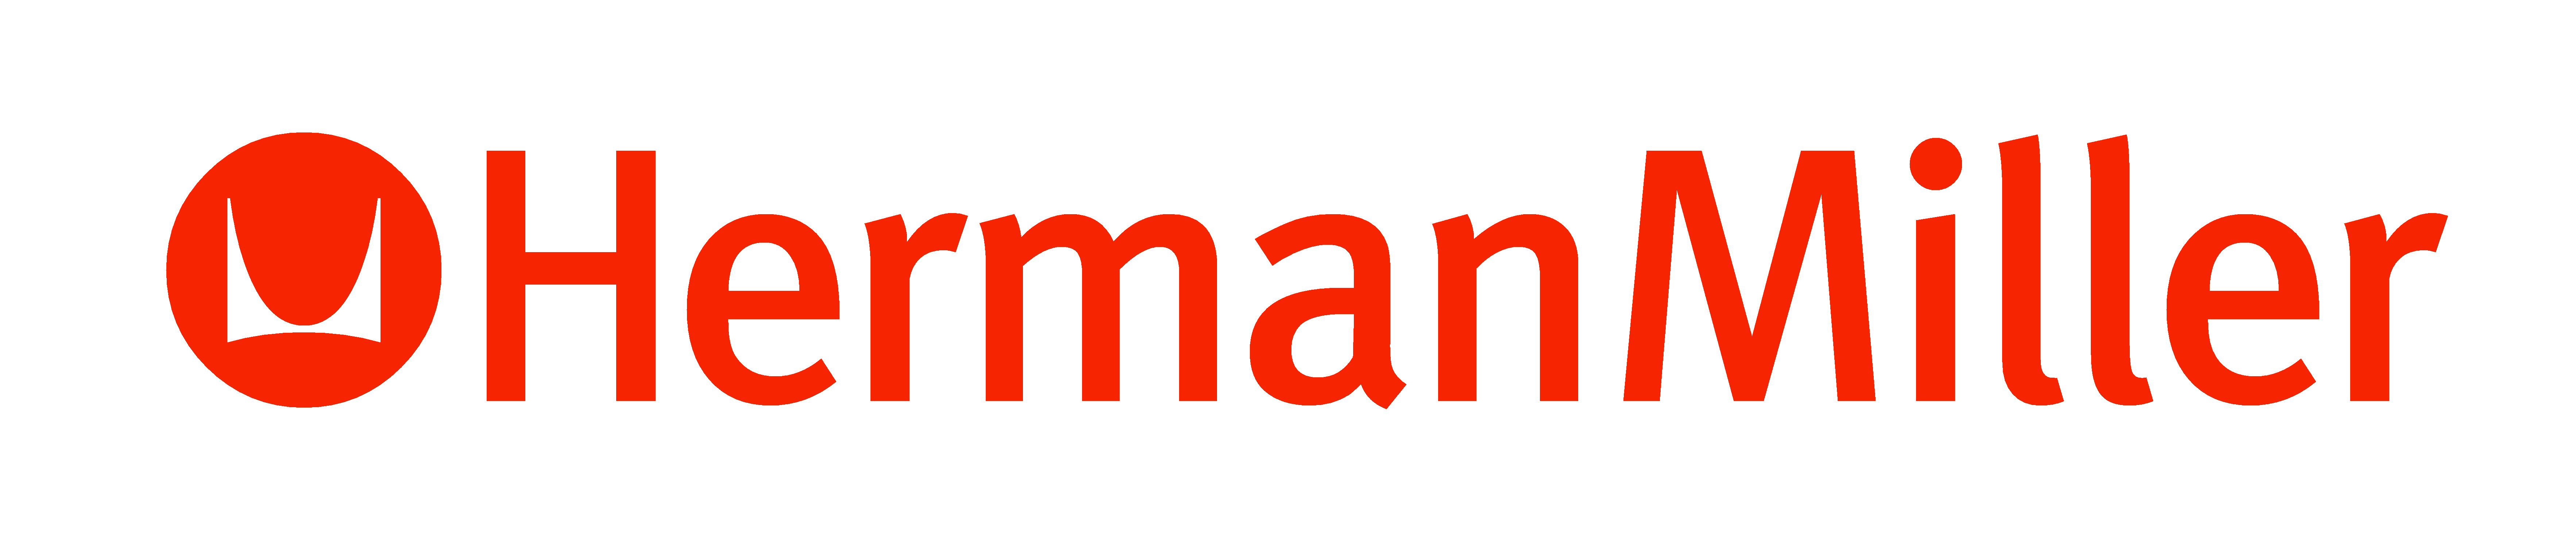 BIM objects - Free download! Herman Miller Inc. | BIMobject